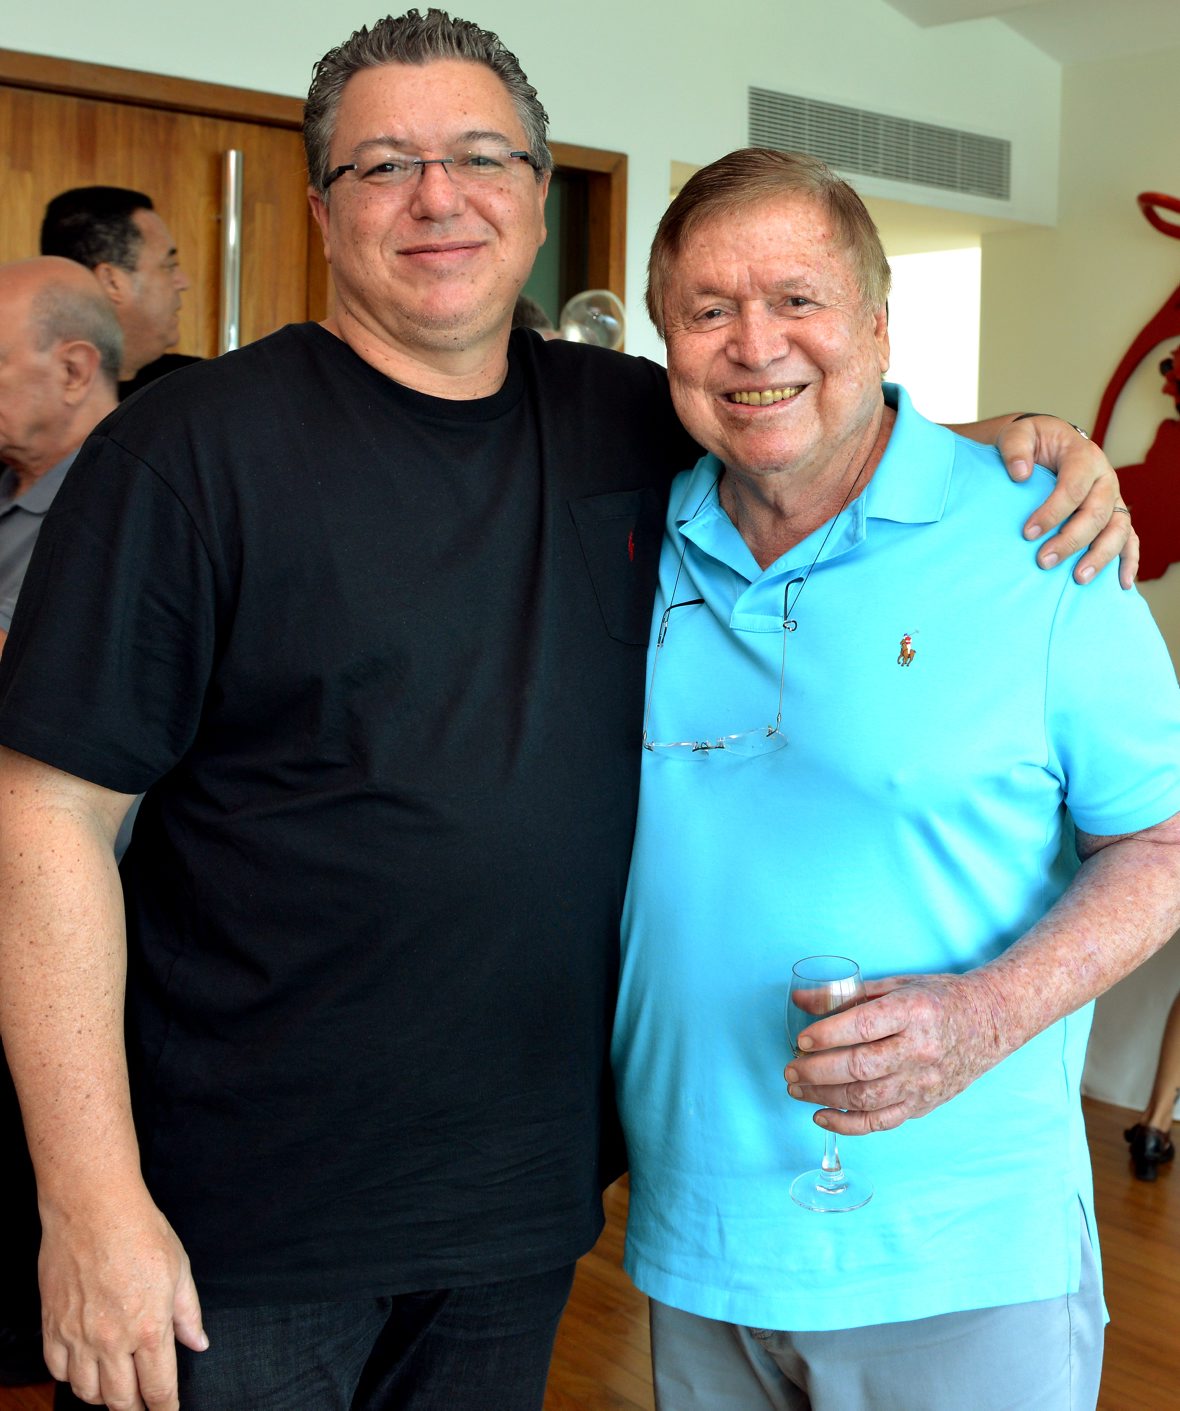 boniDSC_3283 Boninho e seu pai Boni - Aniversário 80 Anos BONI - Novembro 2015 - Foto CRISTINA GRANATO